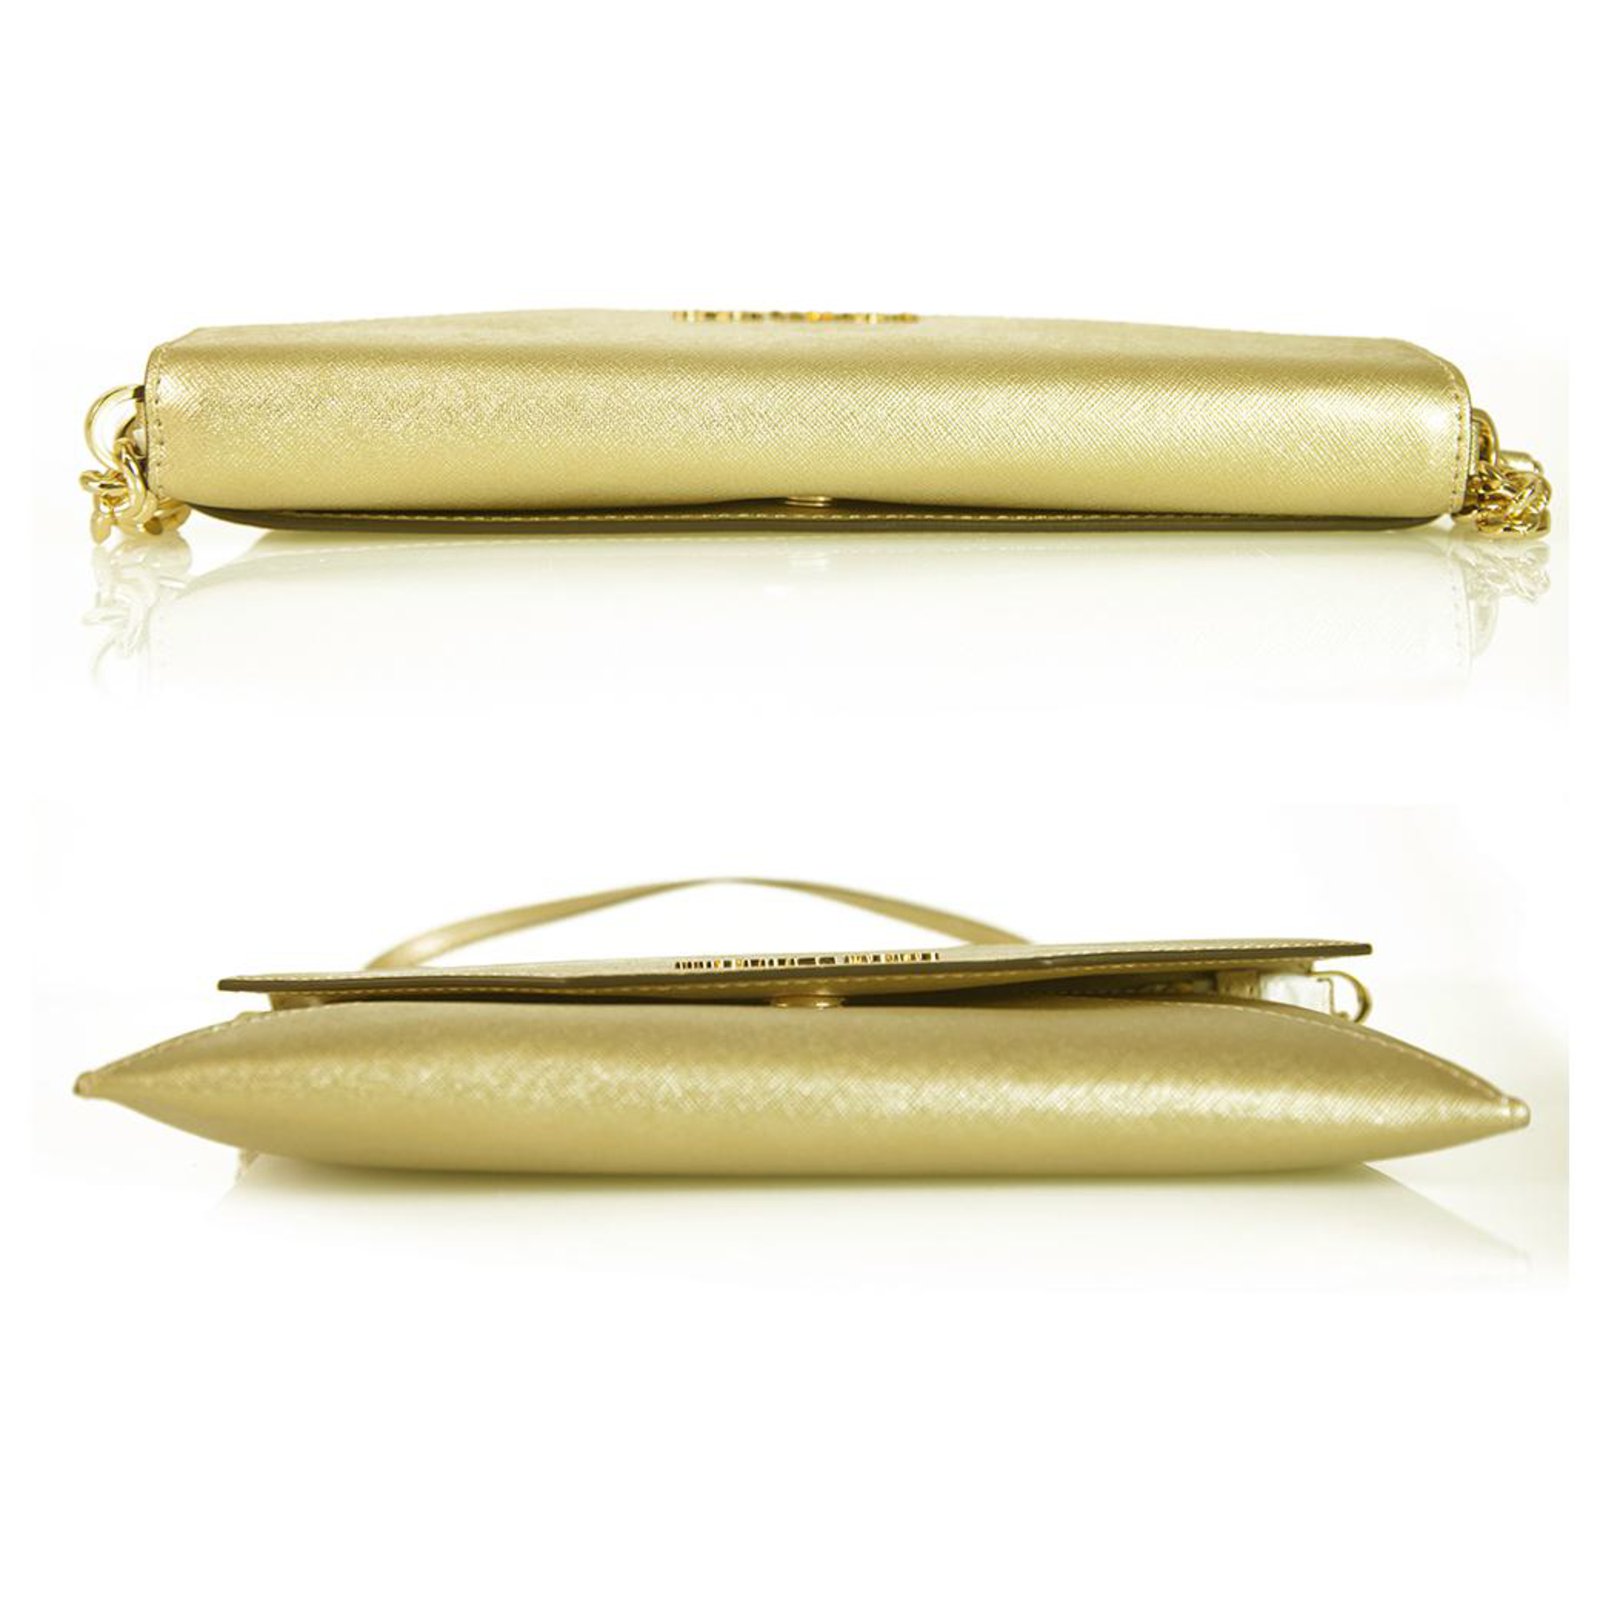 Michael Kors Jet Set Pale Gold Leather Chain Handle Pouchette in Metallic